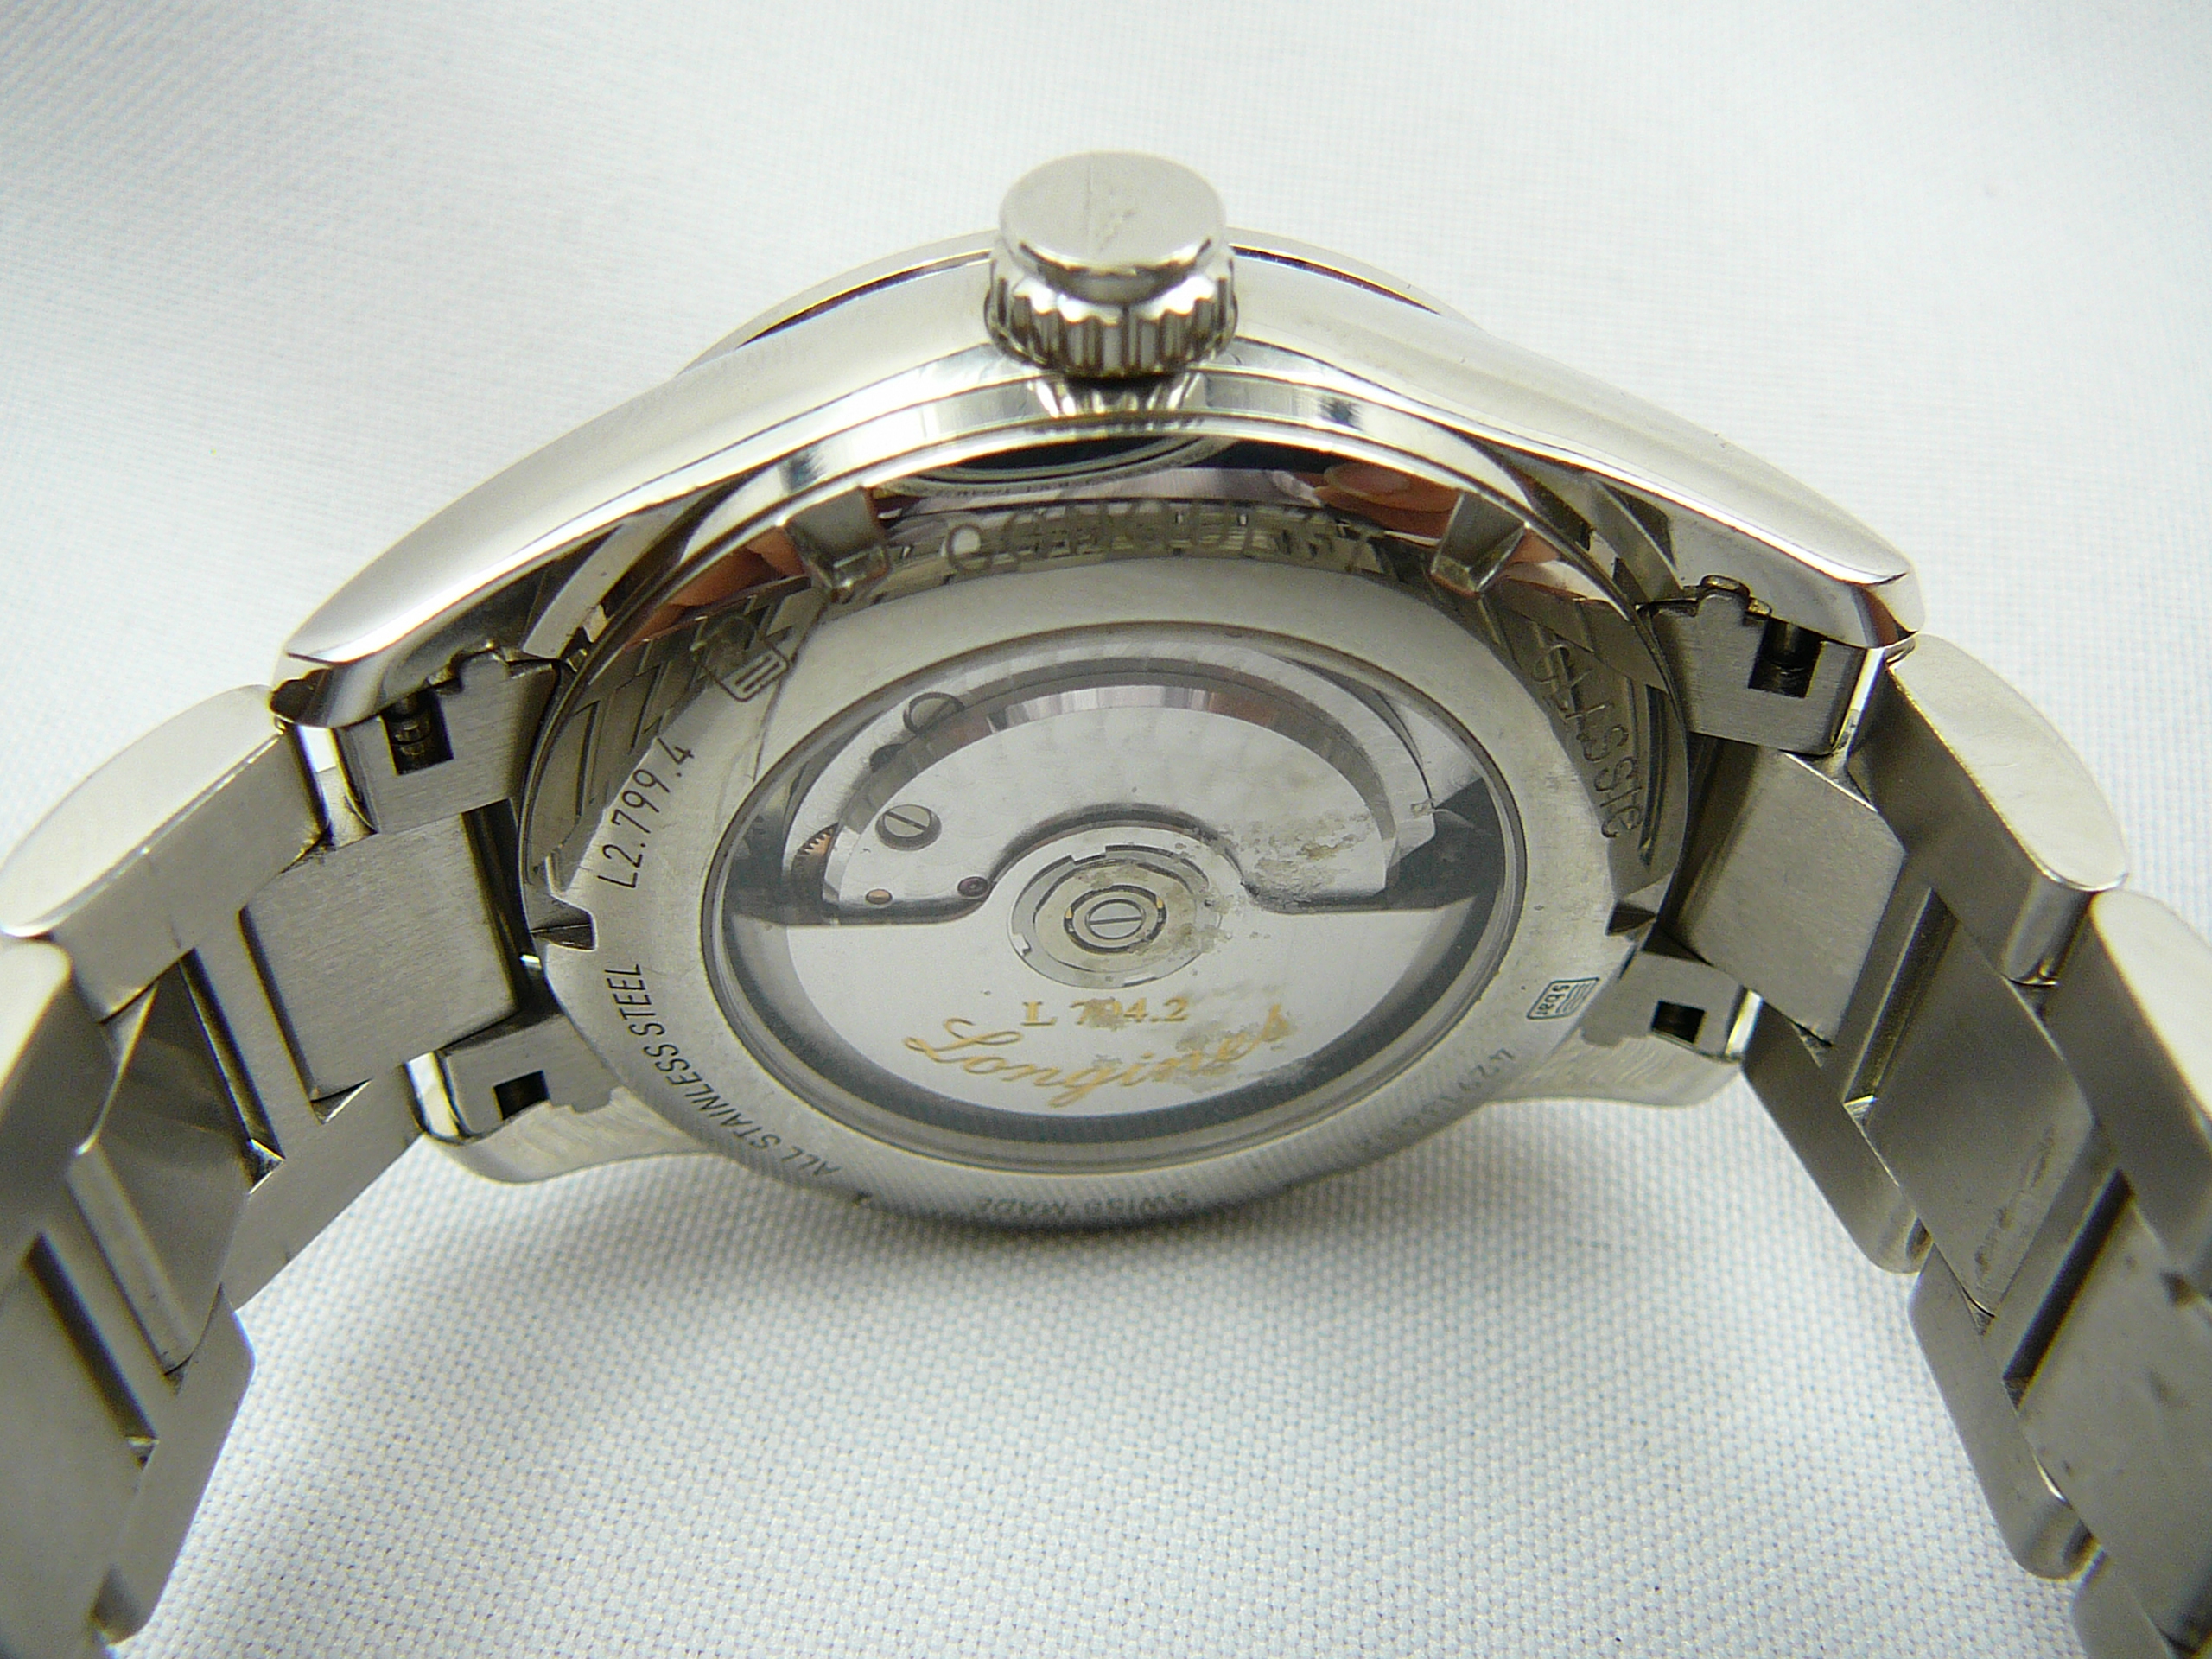 Gents Longines wrist watch - Image 3 of 3